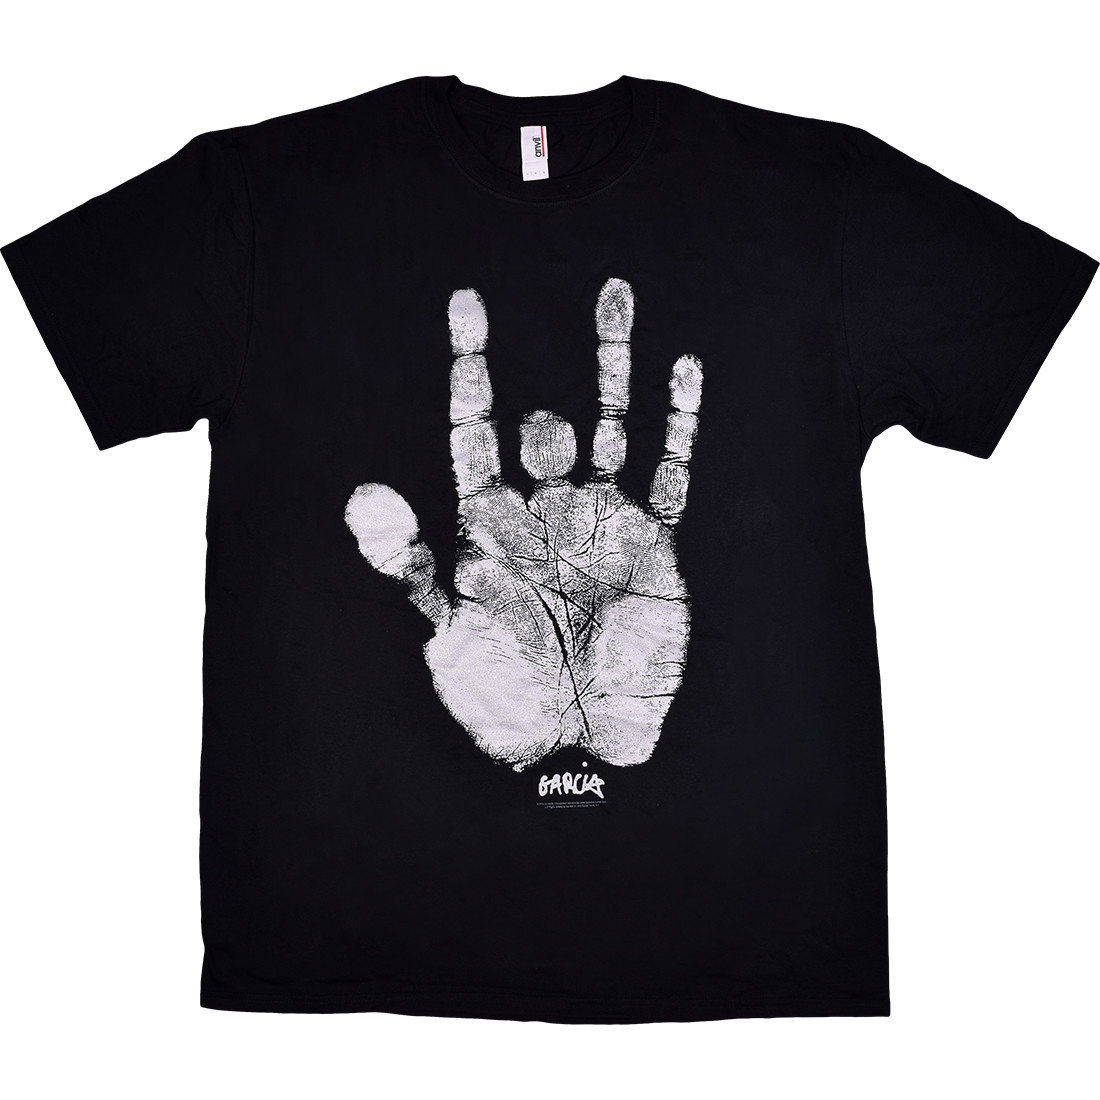 Garcia Handprint Black T-Shirt